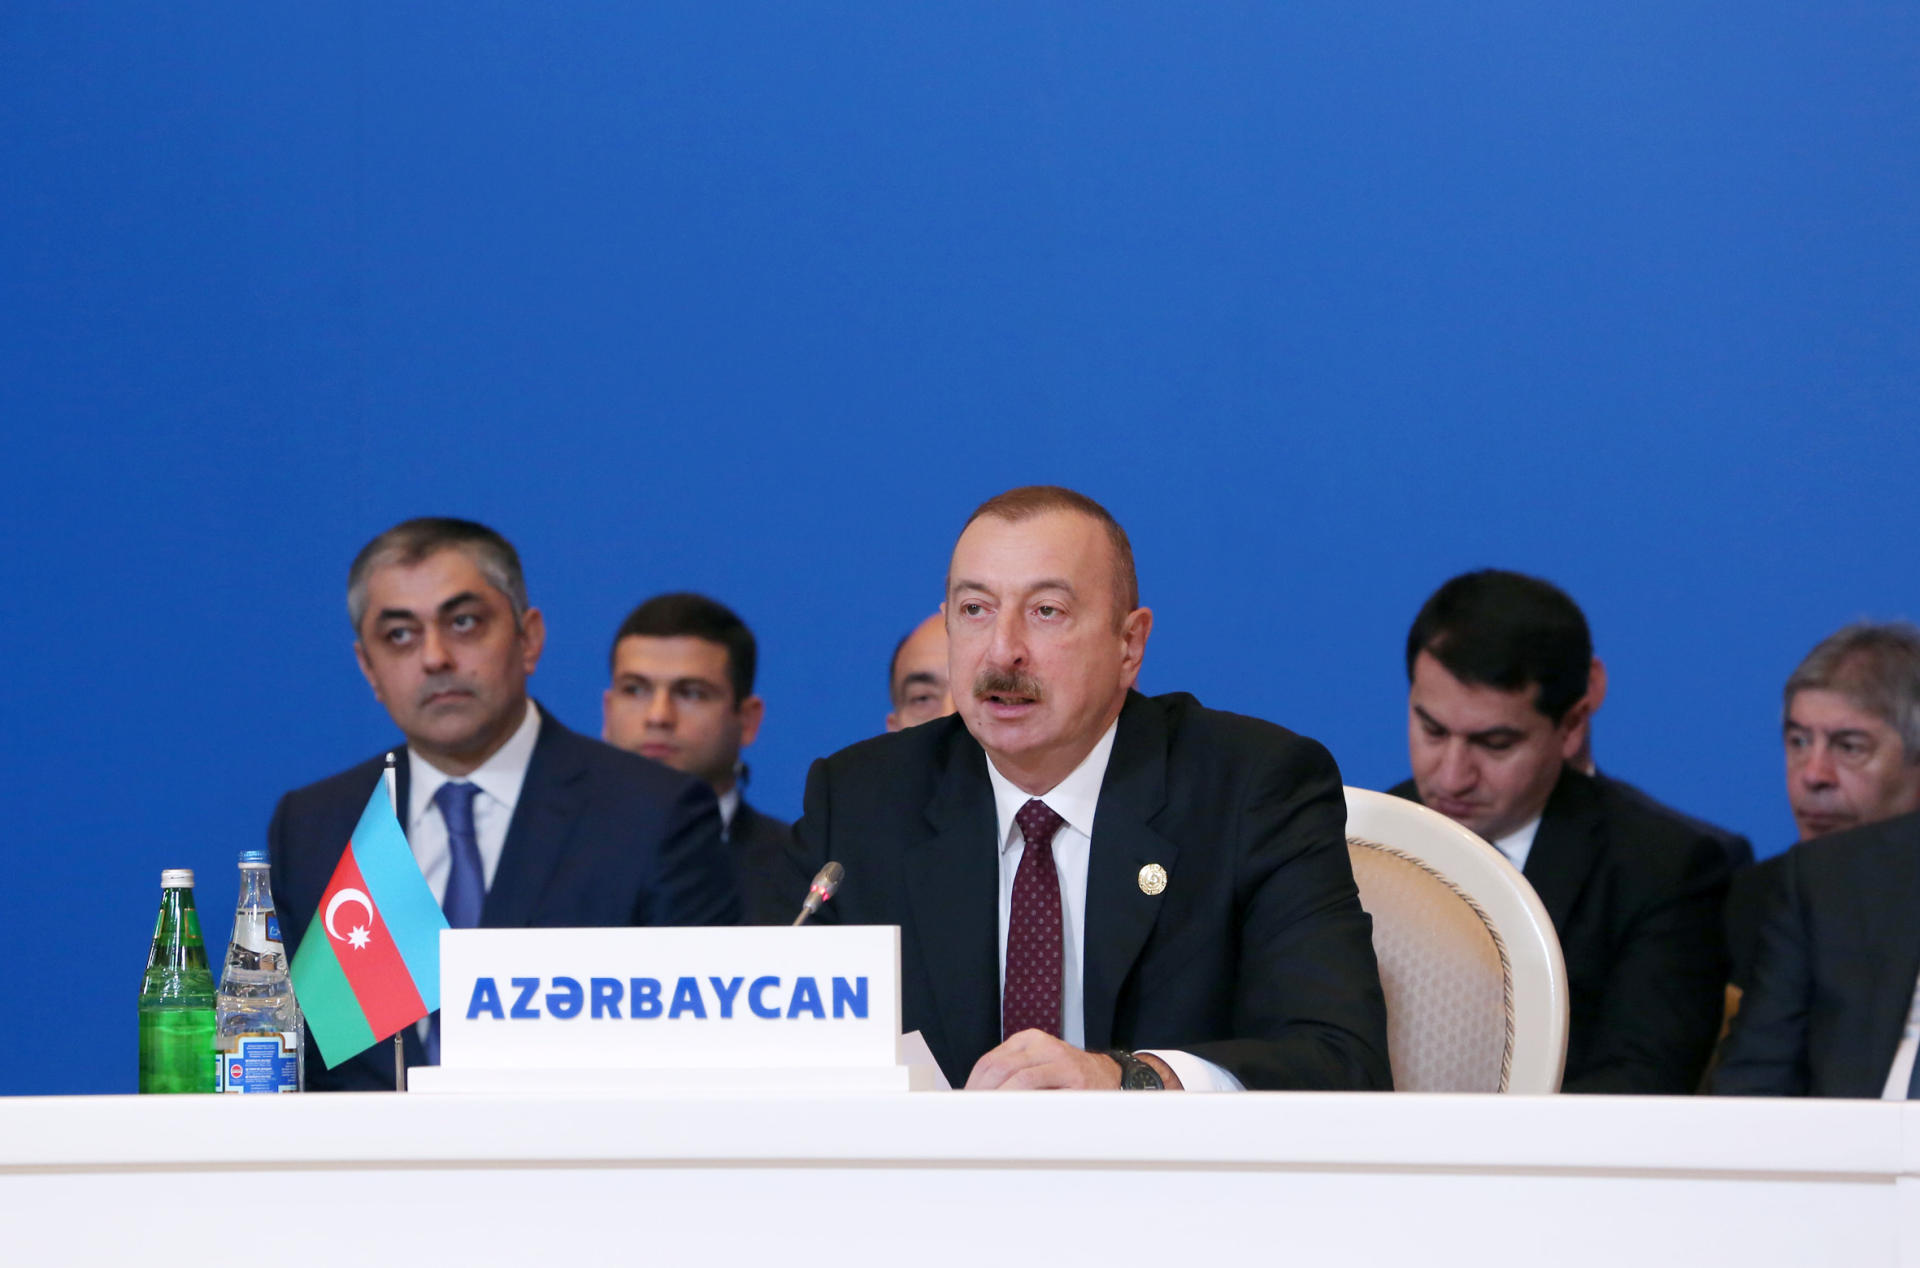 President Aliyev: Taking Zangezur from Azerbaijan divided Turkic world geographically